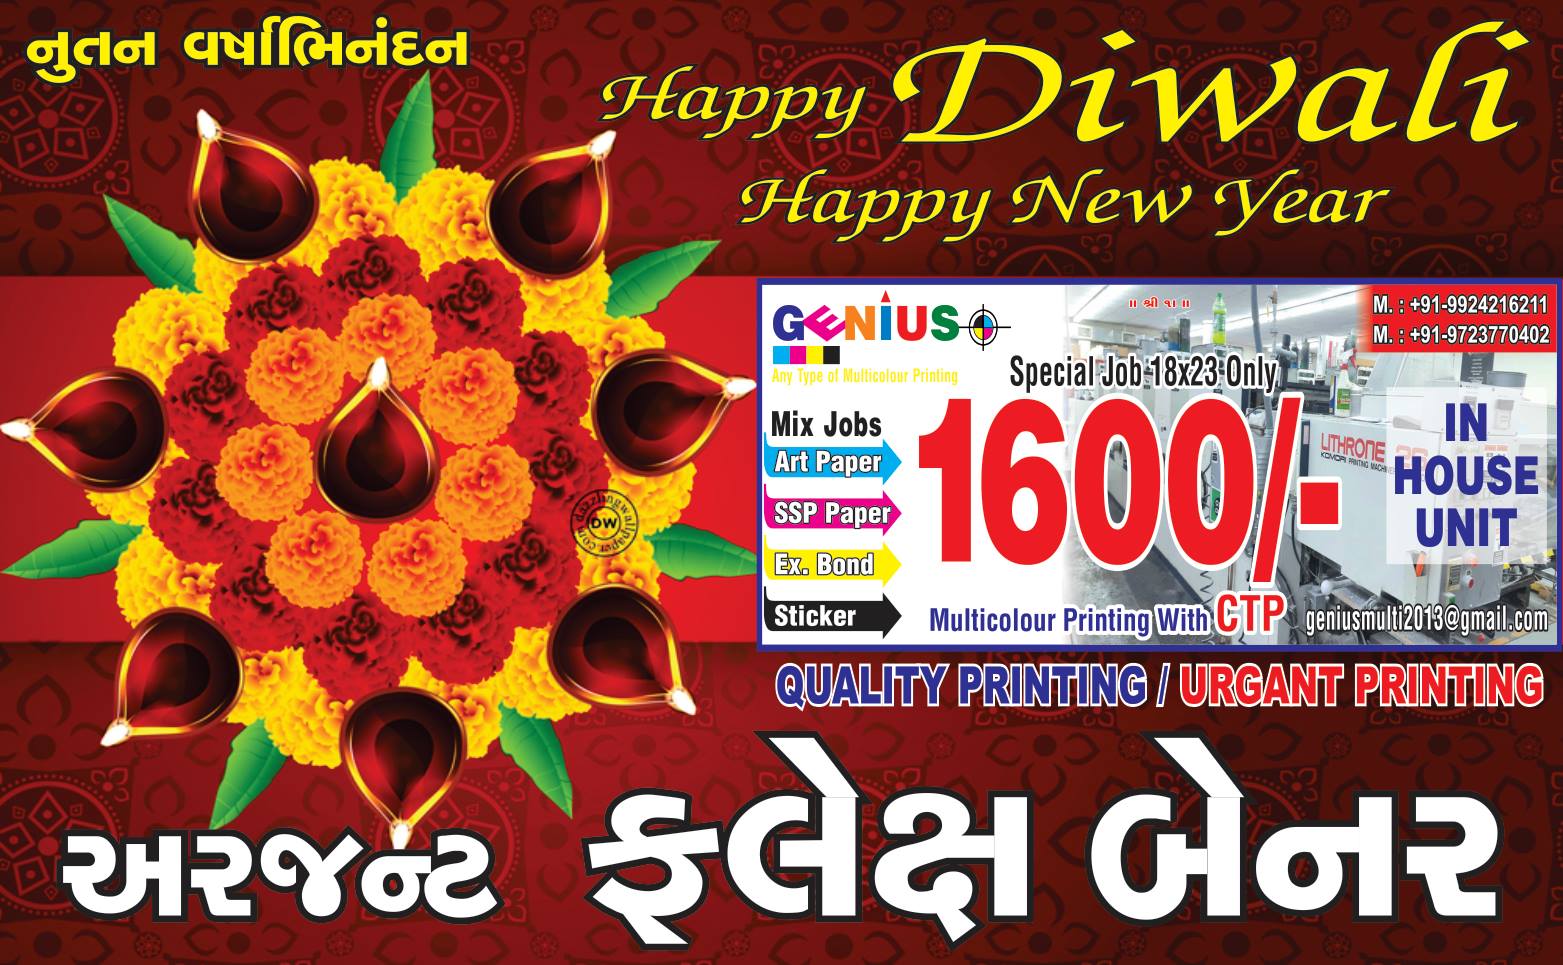 HAPPY DIWALI & NEW YEAR